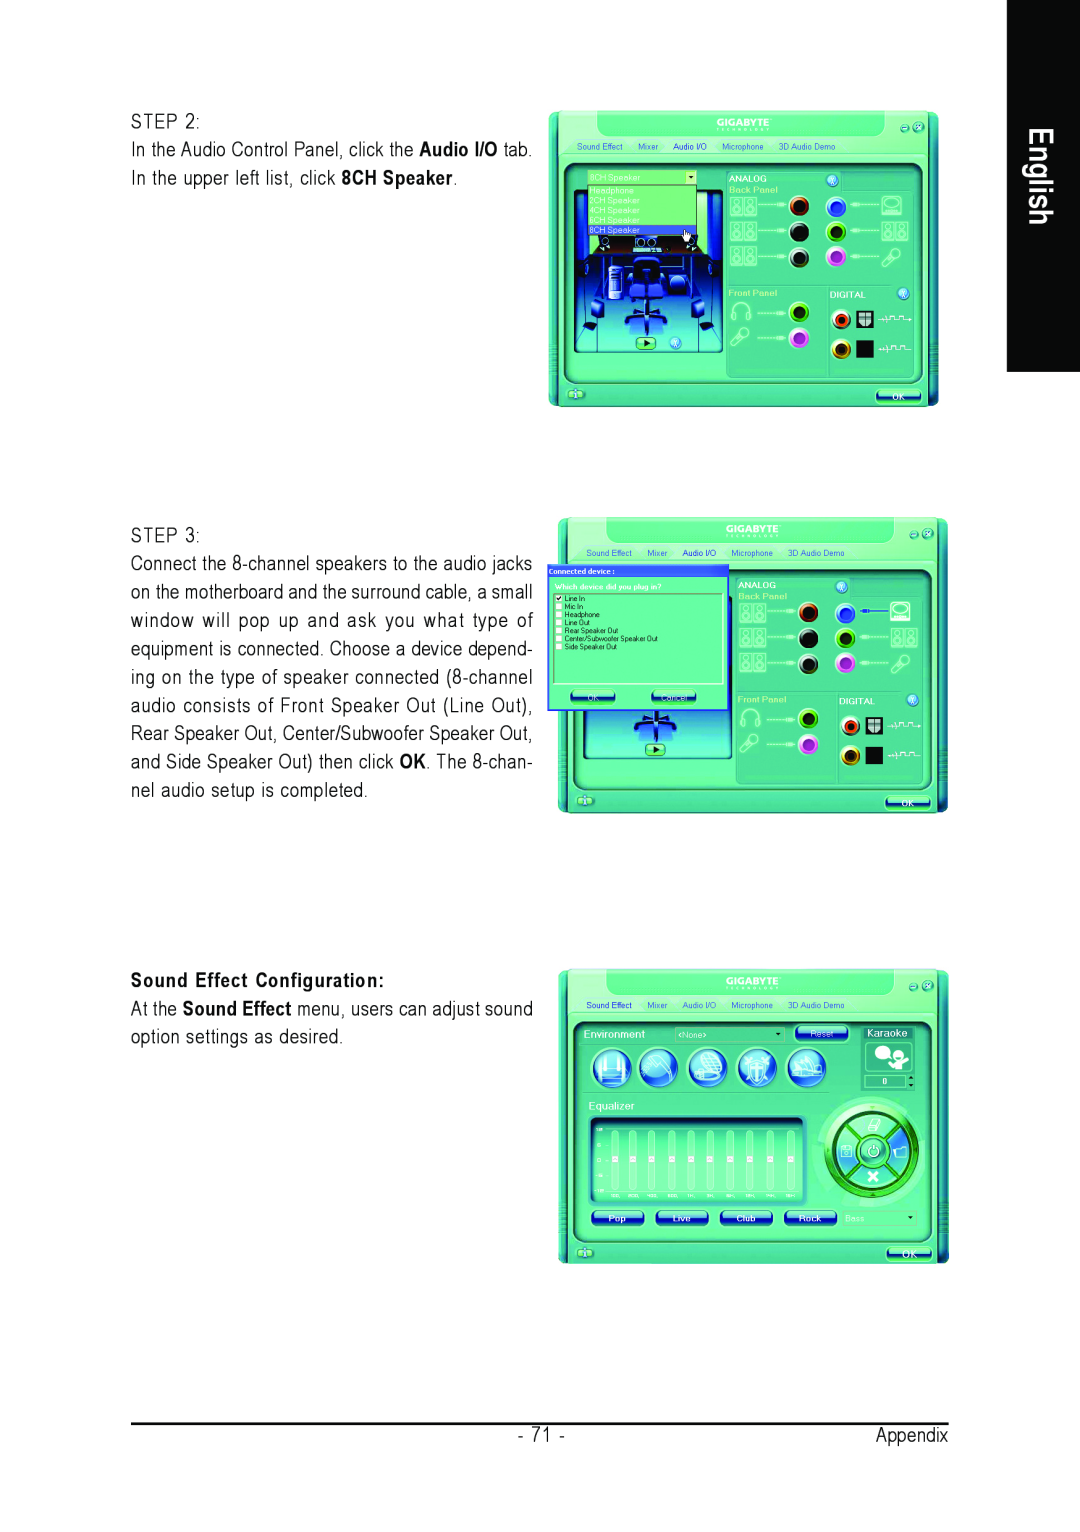 Gigabyte GA-945PLM-(D)S2 user manual English, Sound Effect Configuration 